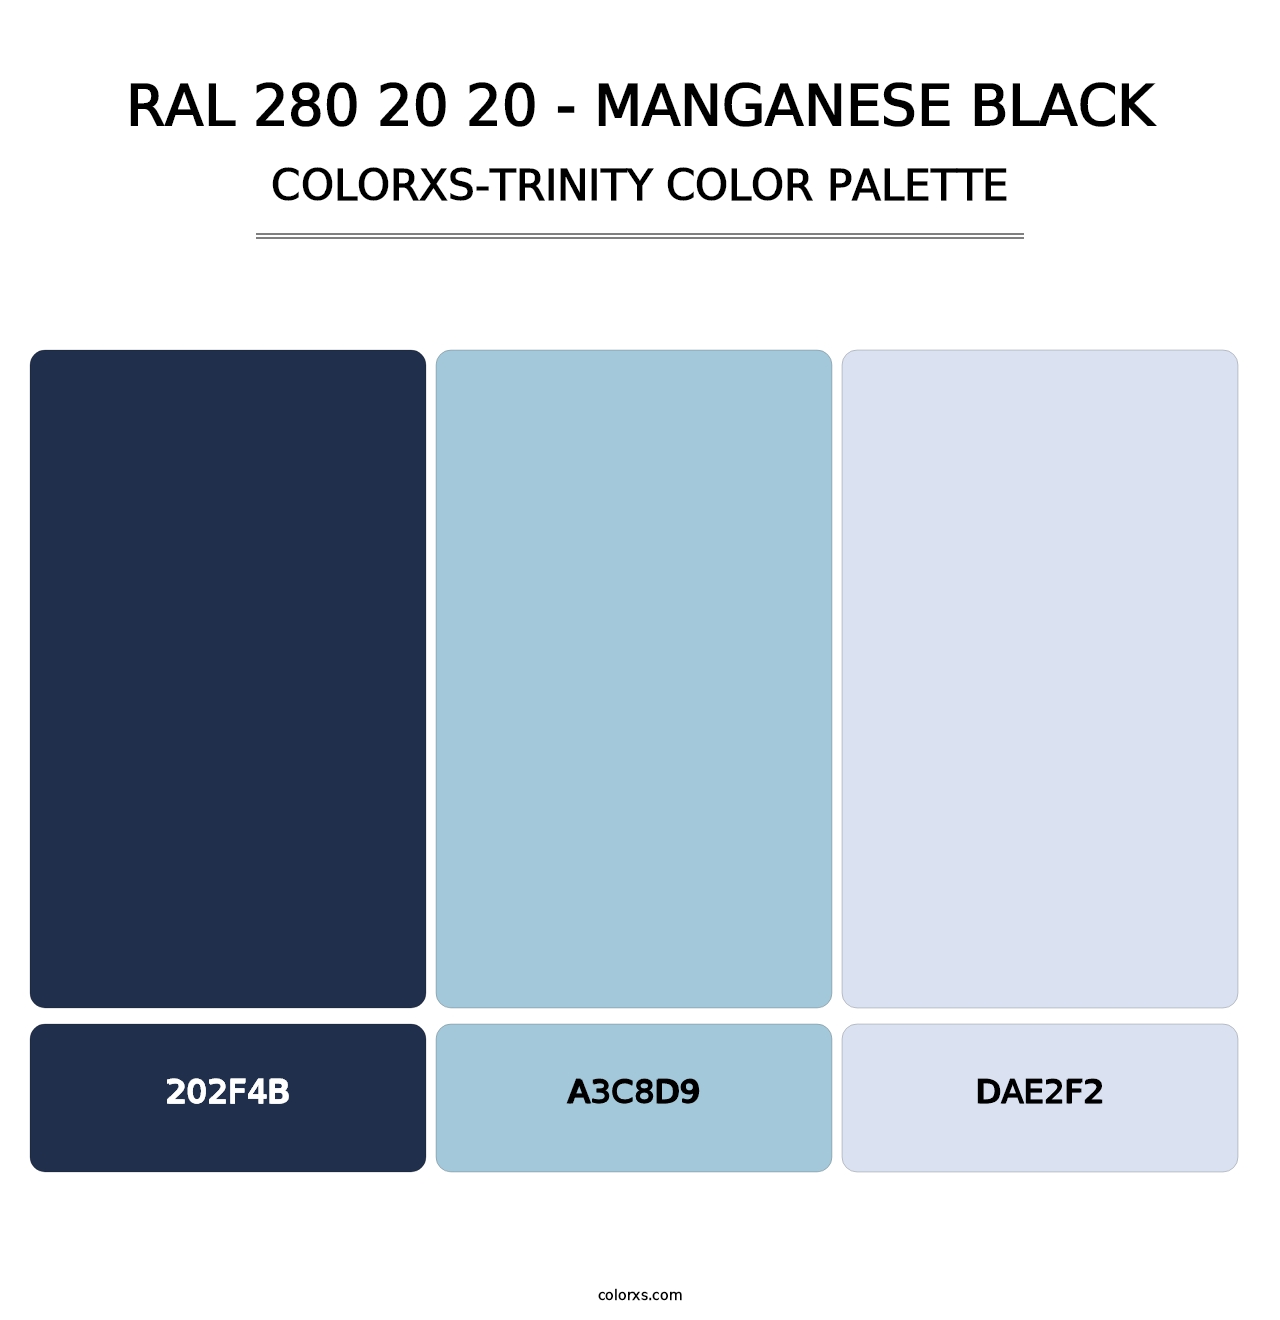 RAL 280 20 20 - Manganese Black - Colorxs Trinity Palette